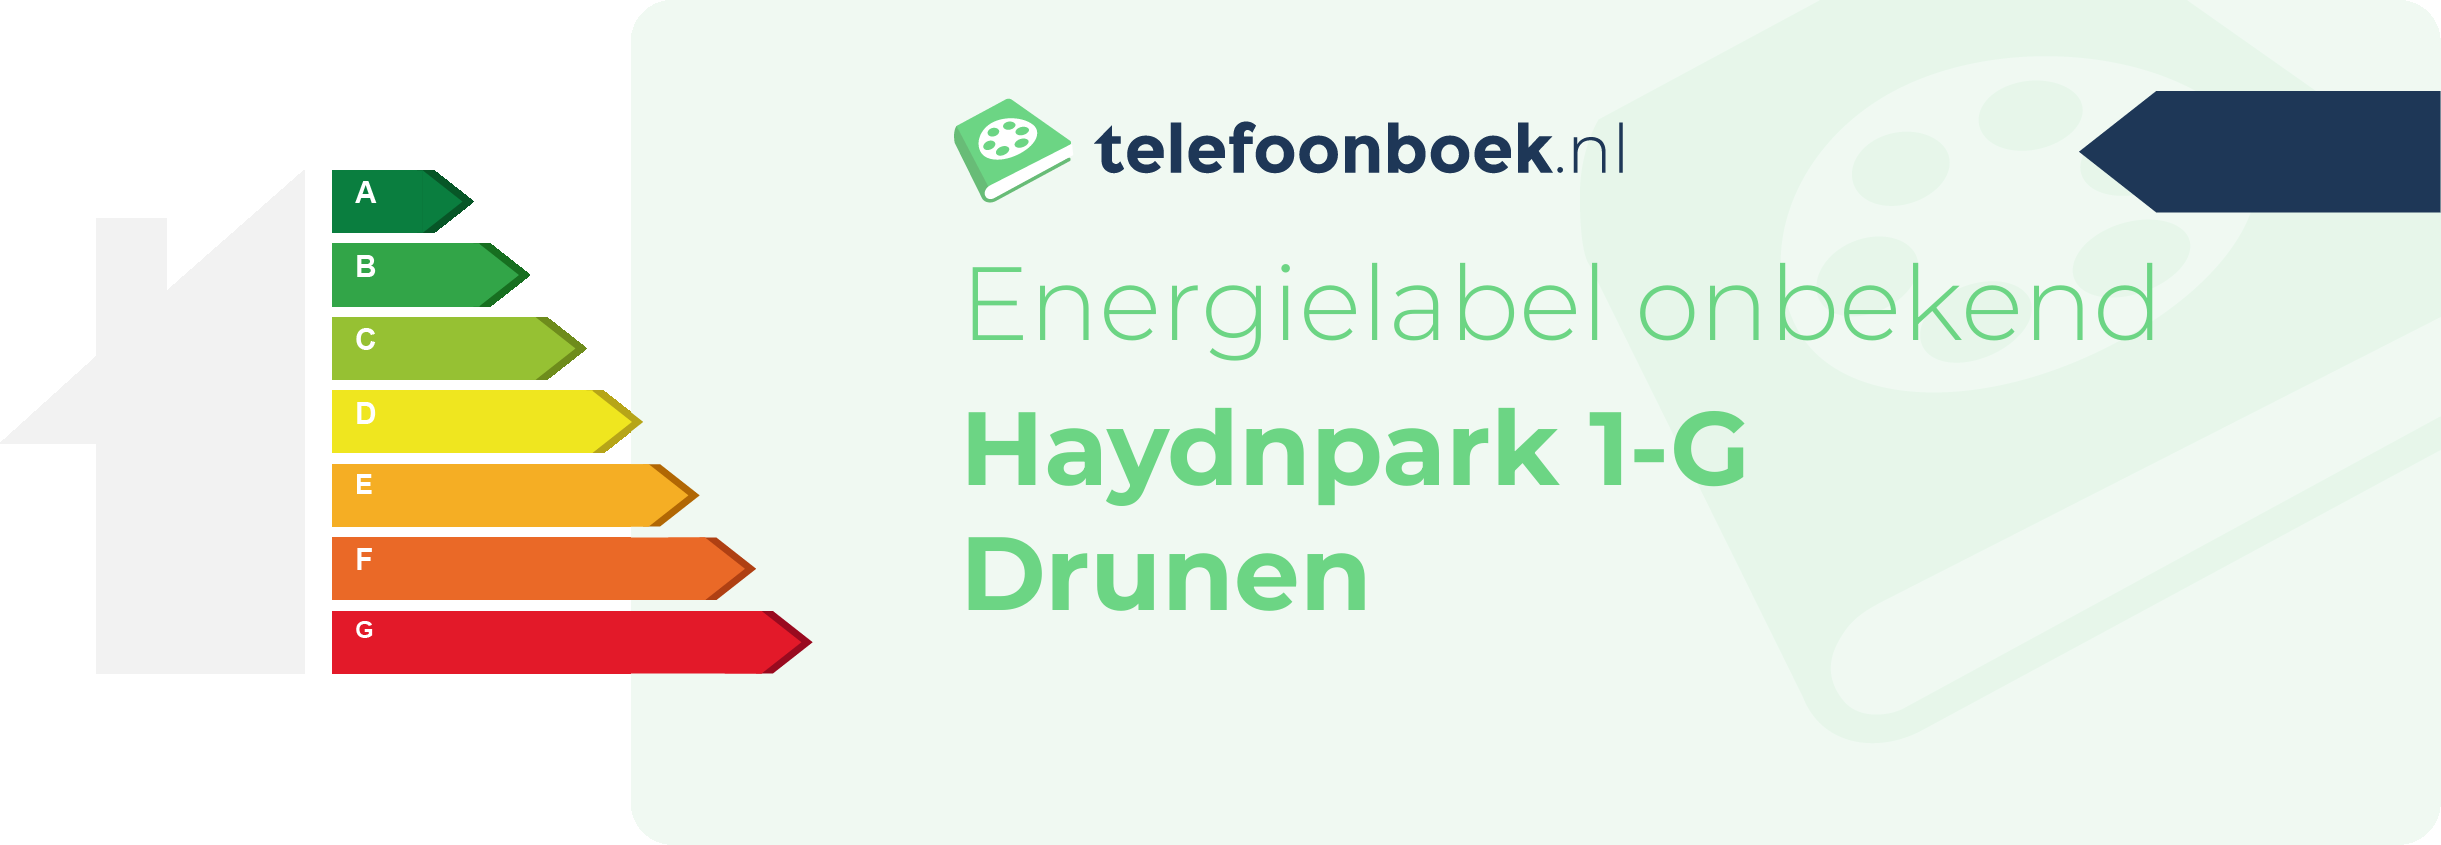 Energielabel Haydnpark 1-G Drunen